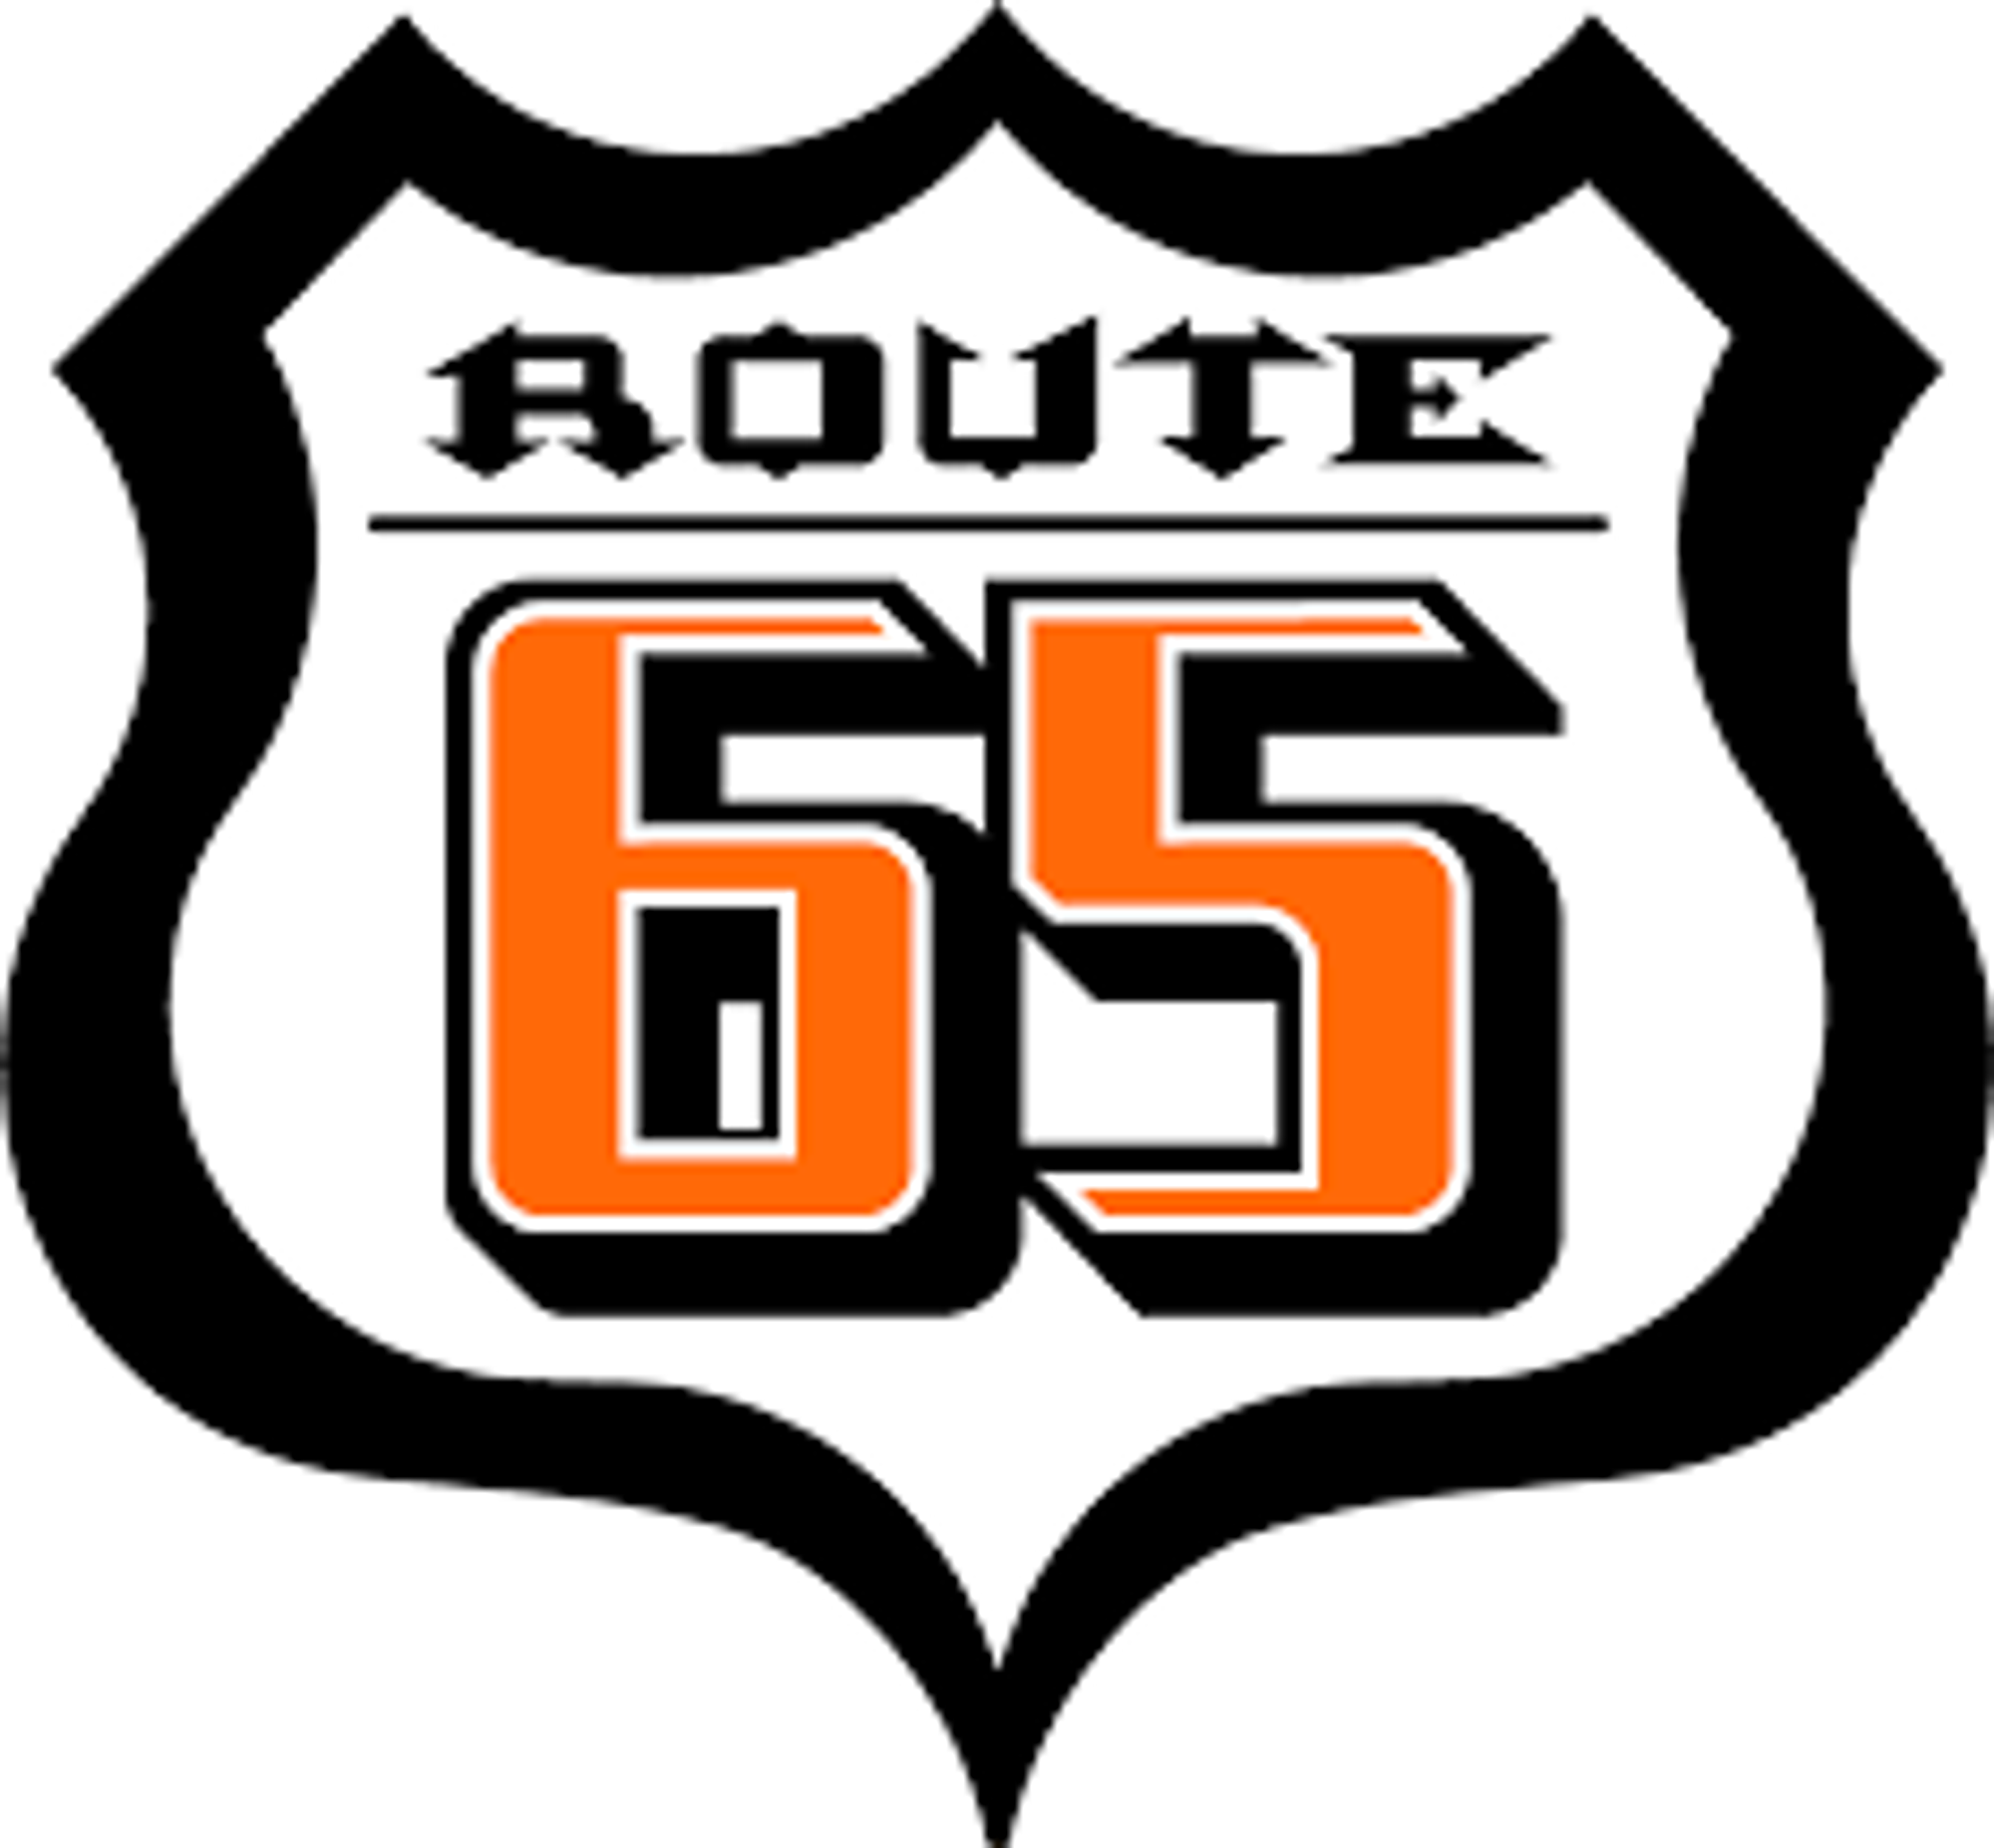 Route 65 Harley Davidson